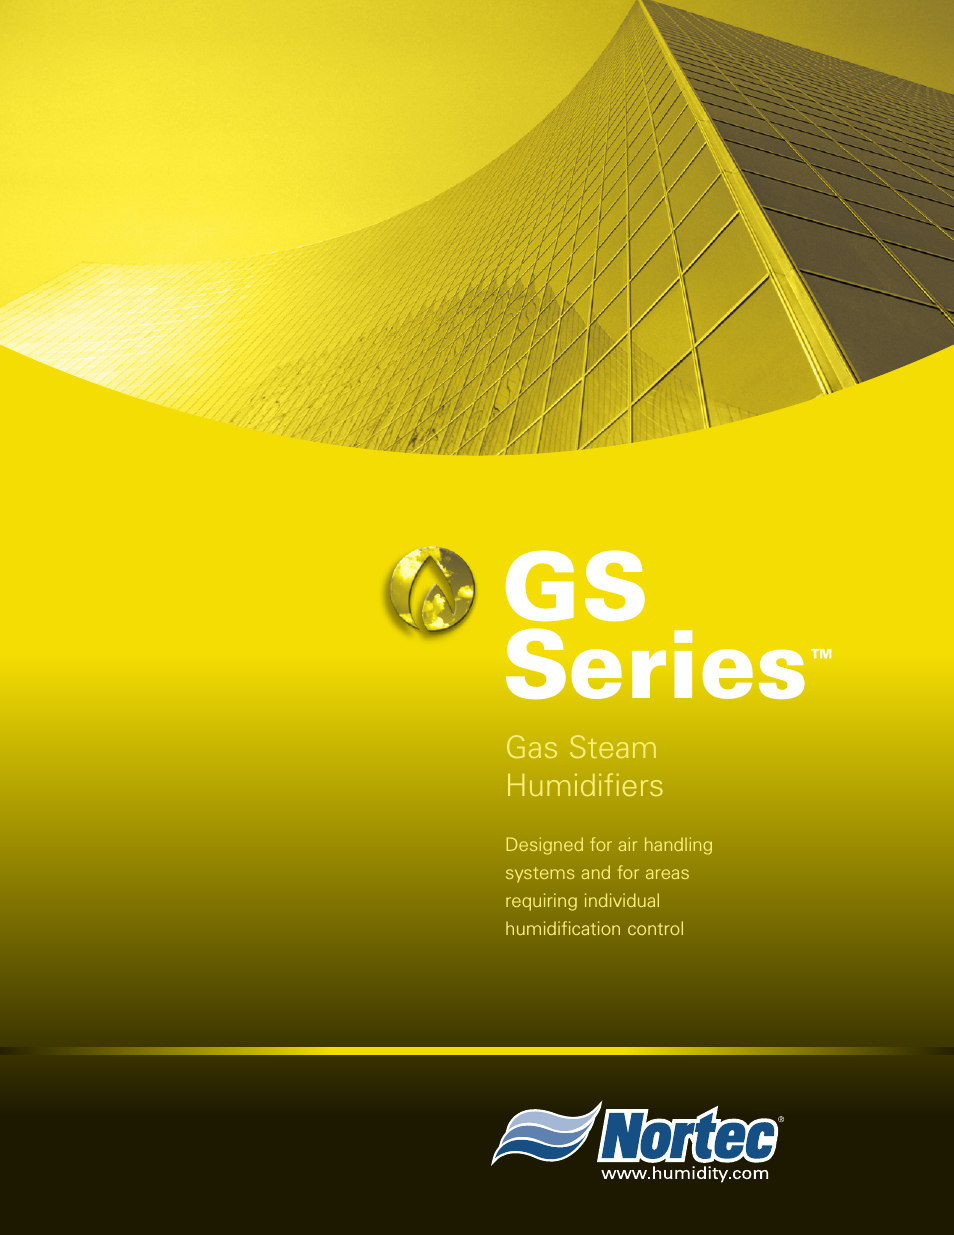 GS Series